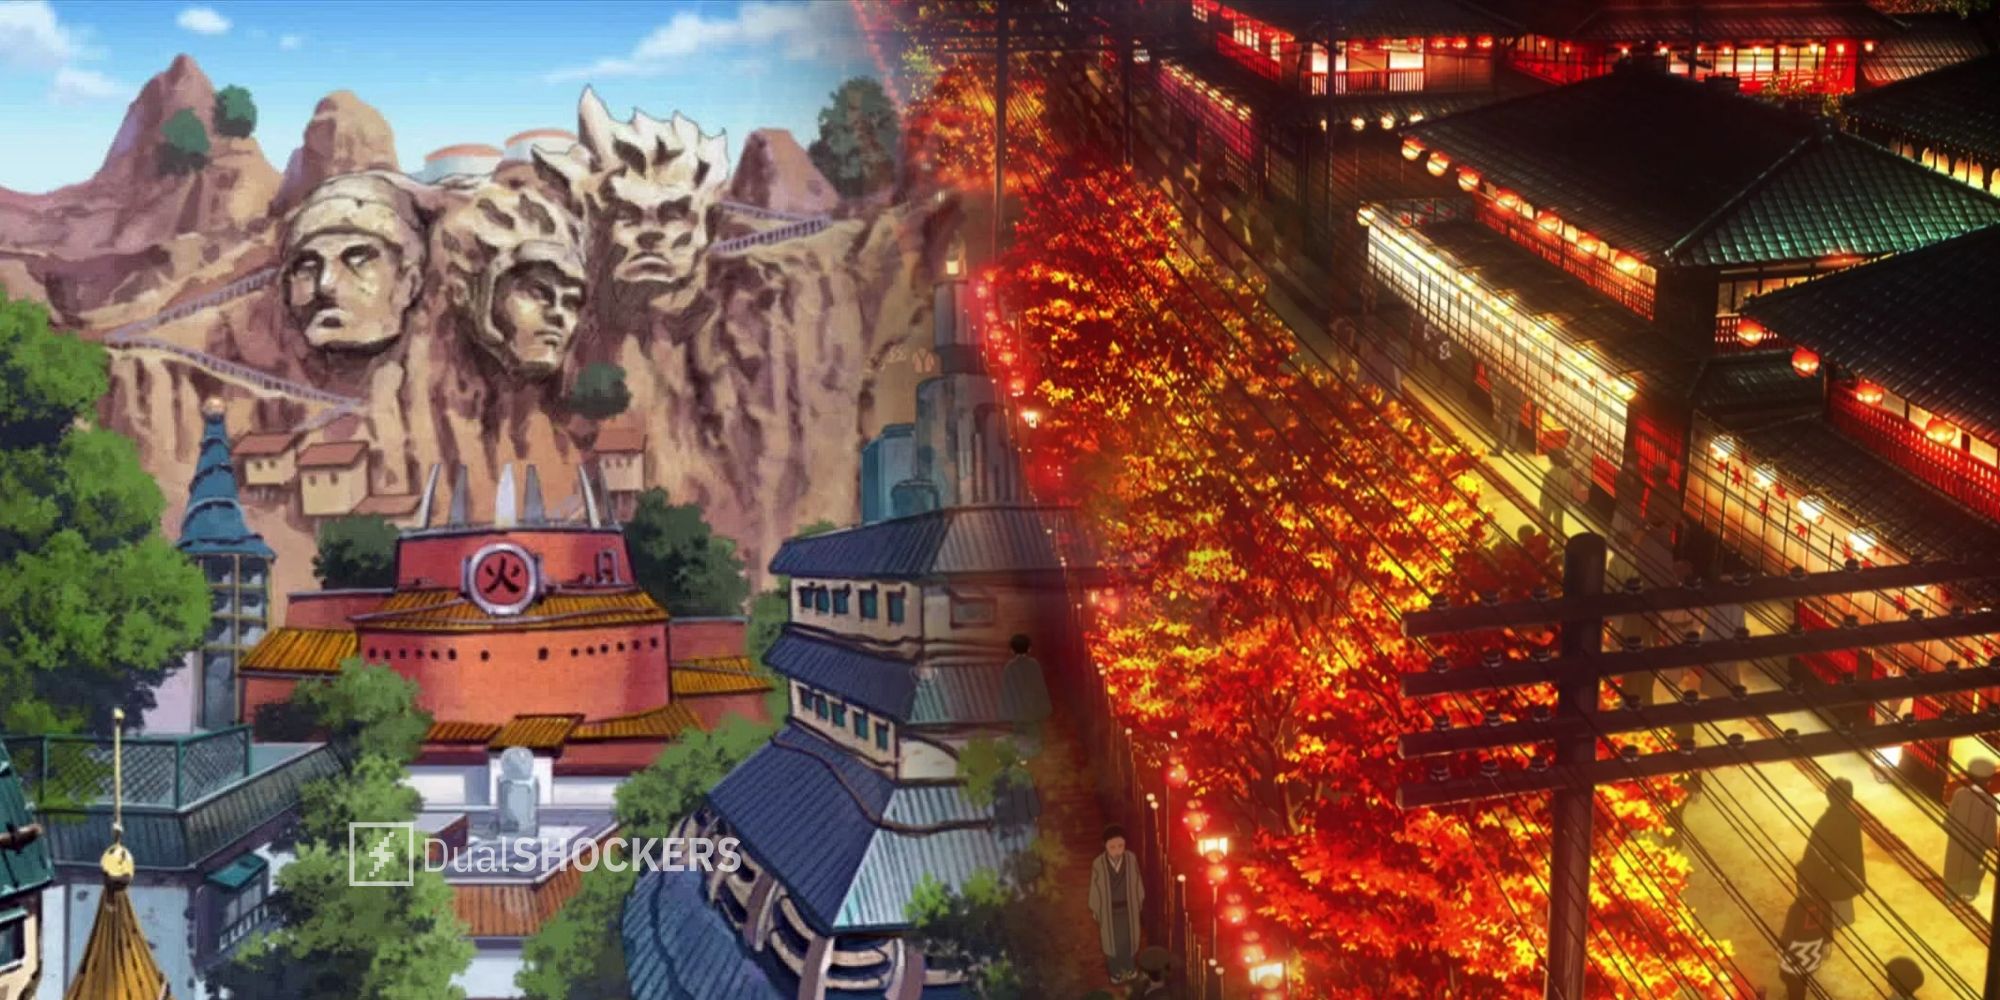 Hidden Leaf Village in Naruto, Entertainment District in Demon Slayer anime locations